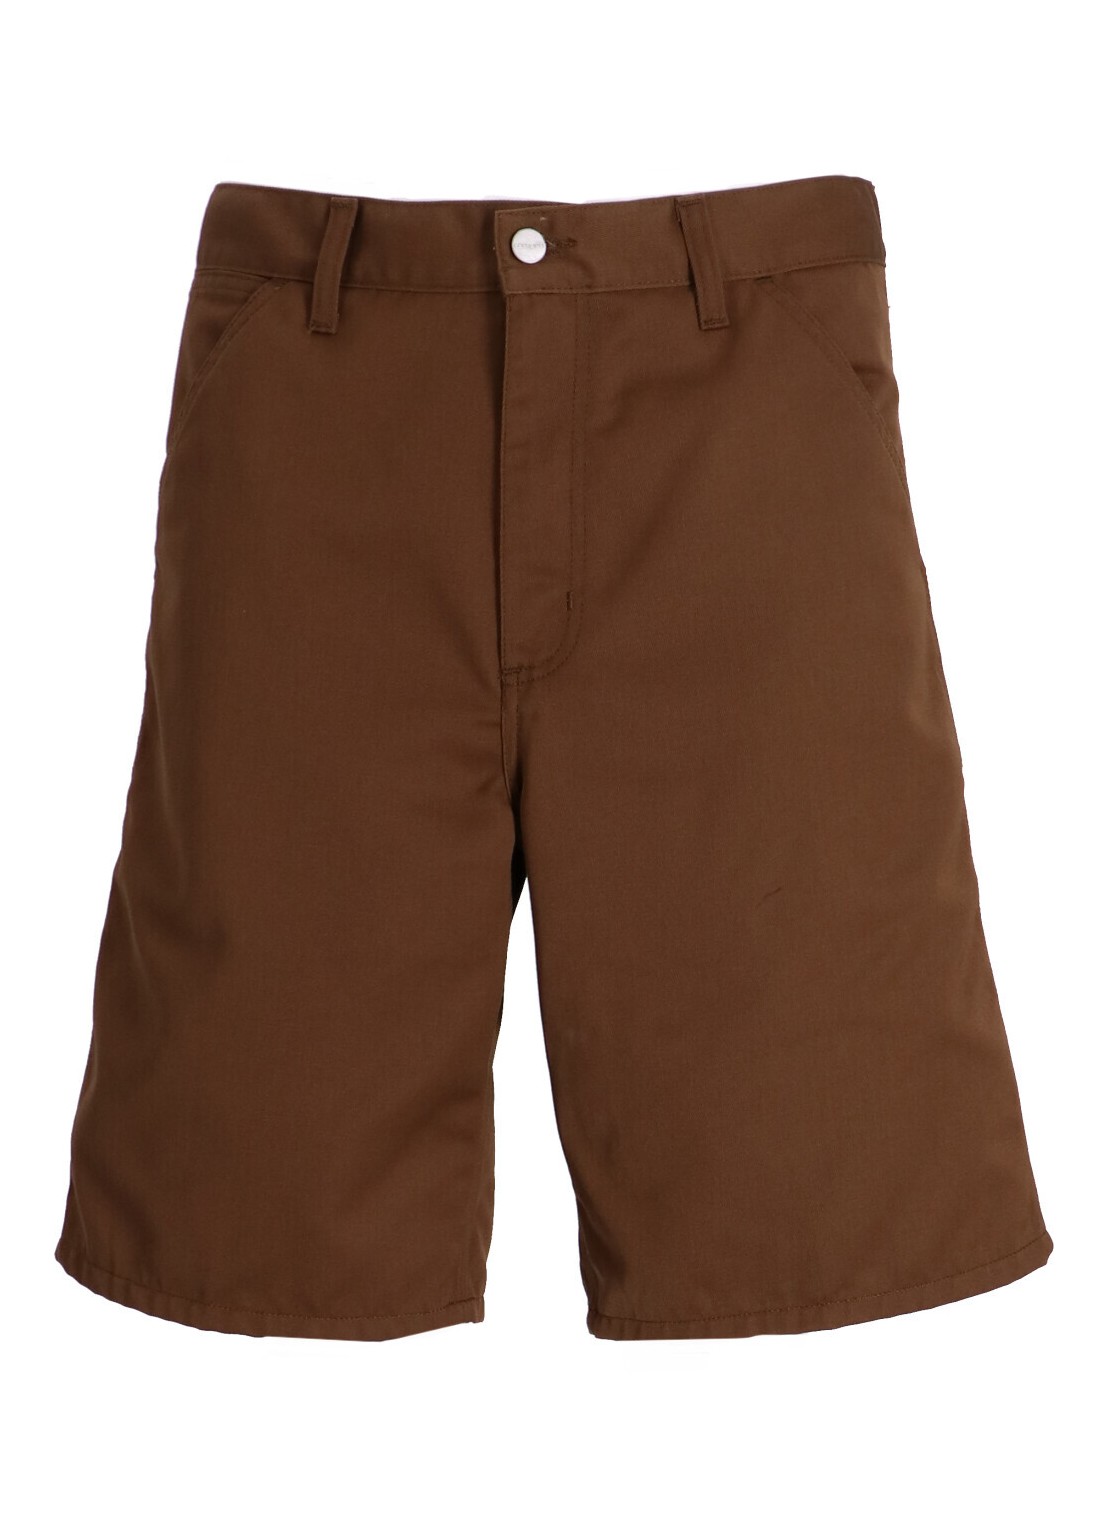 Pantalon corto carhartt short pant mansimple short - i031496 1zd02 talla 30
 